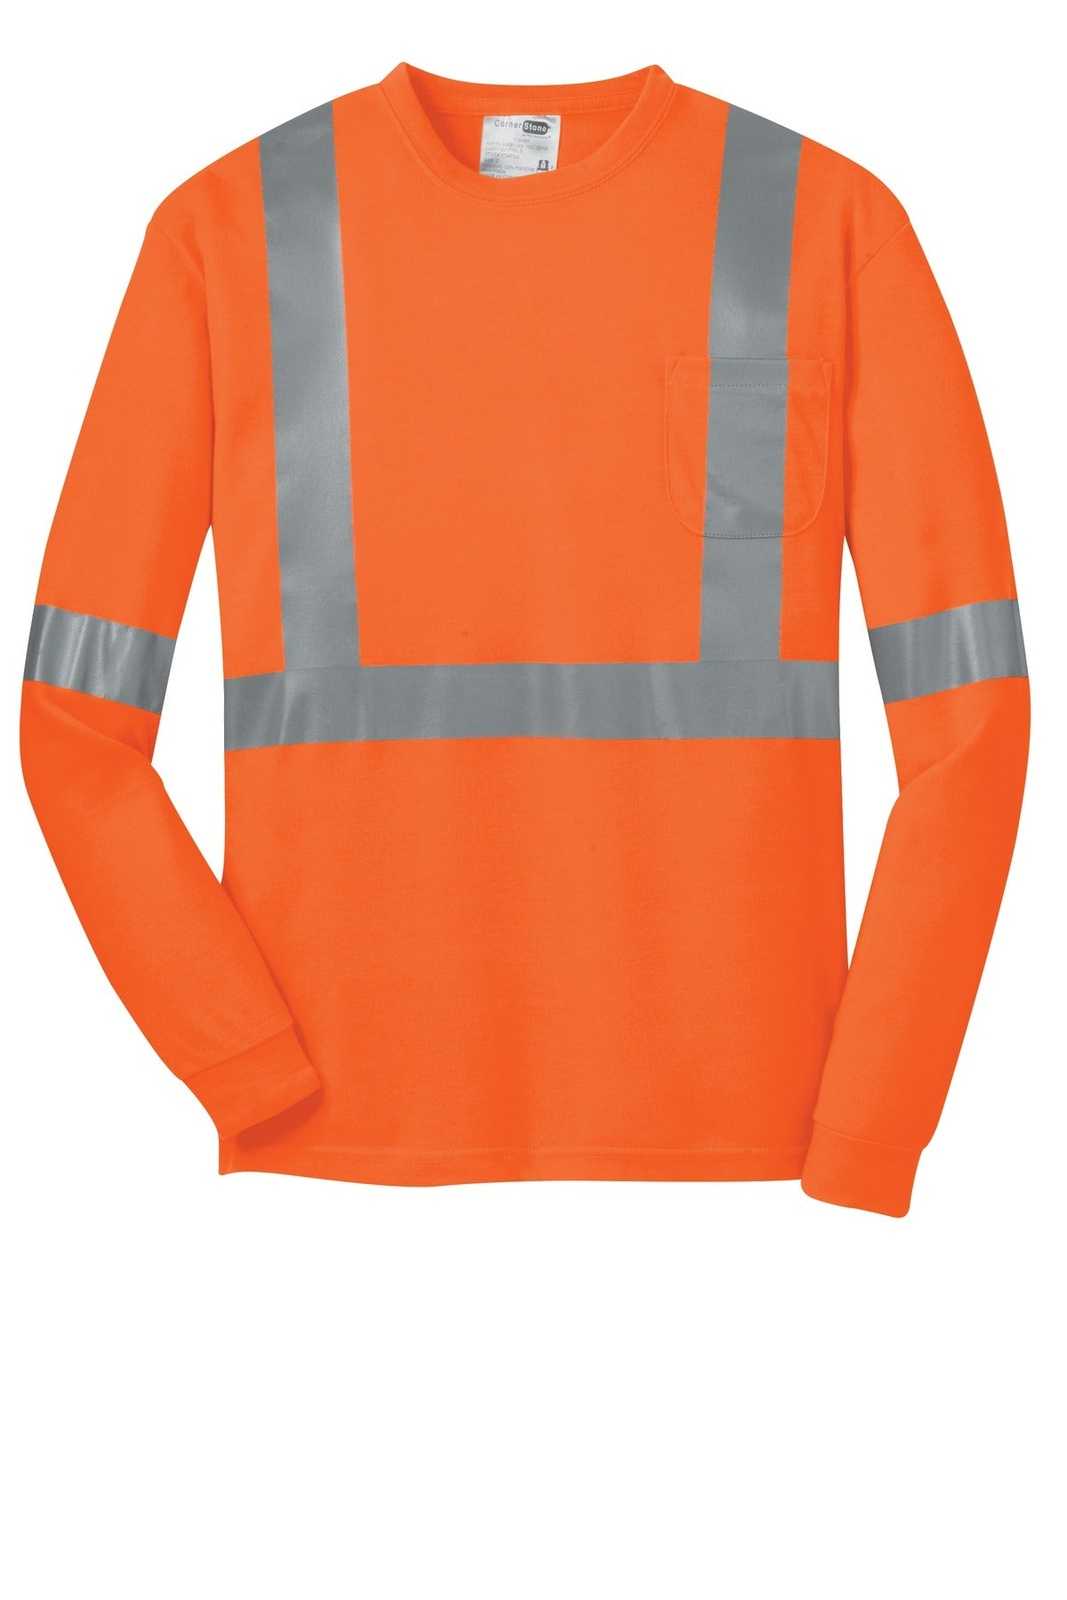 CornerStone CS401LS ANSI 107 Class 2 Long Sleeve Safety T-Shirt - Safety Orange Reflective - HIT a Double - 5